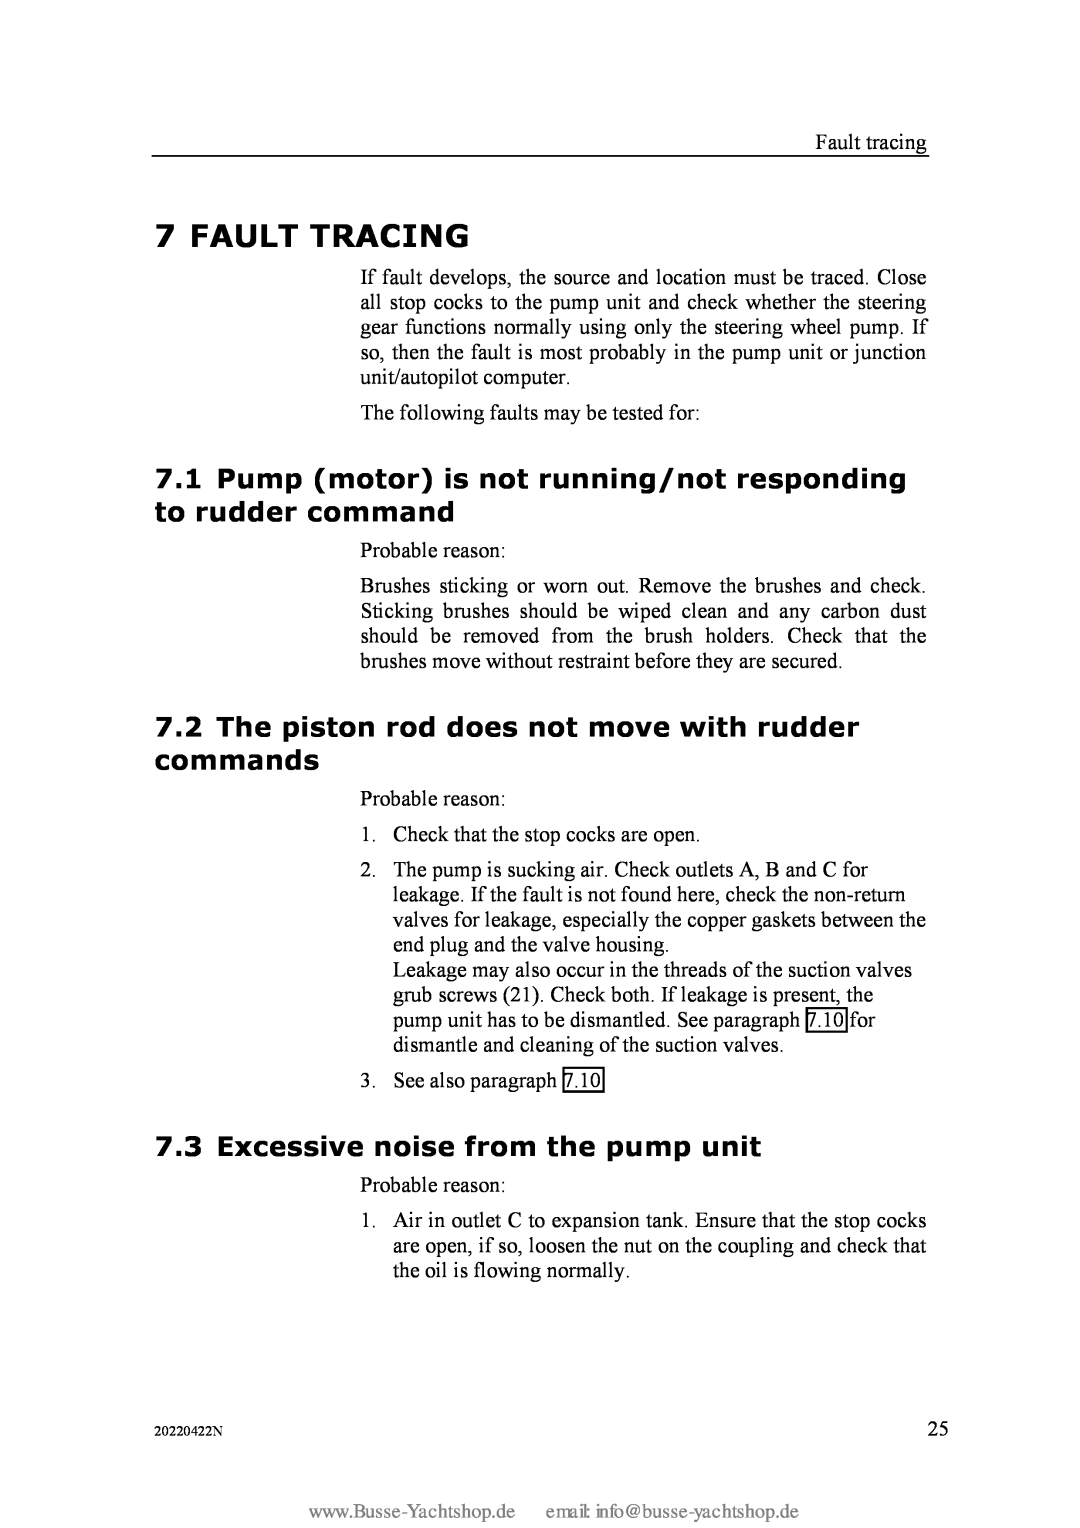 Simran RPU80 instruction manual Fault Tracing 